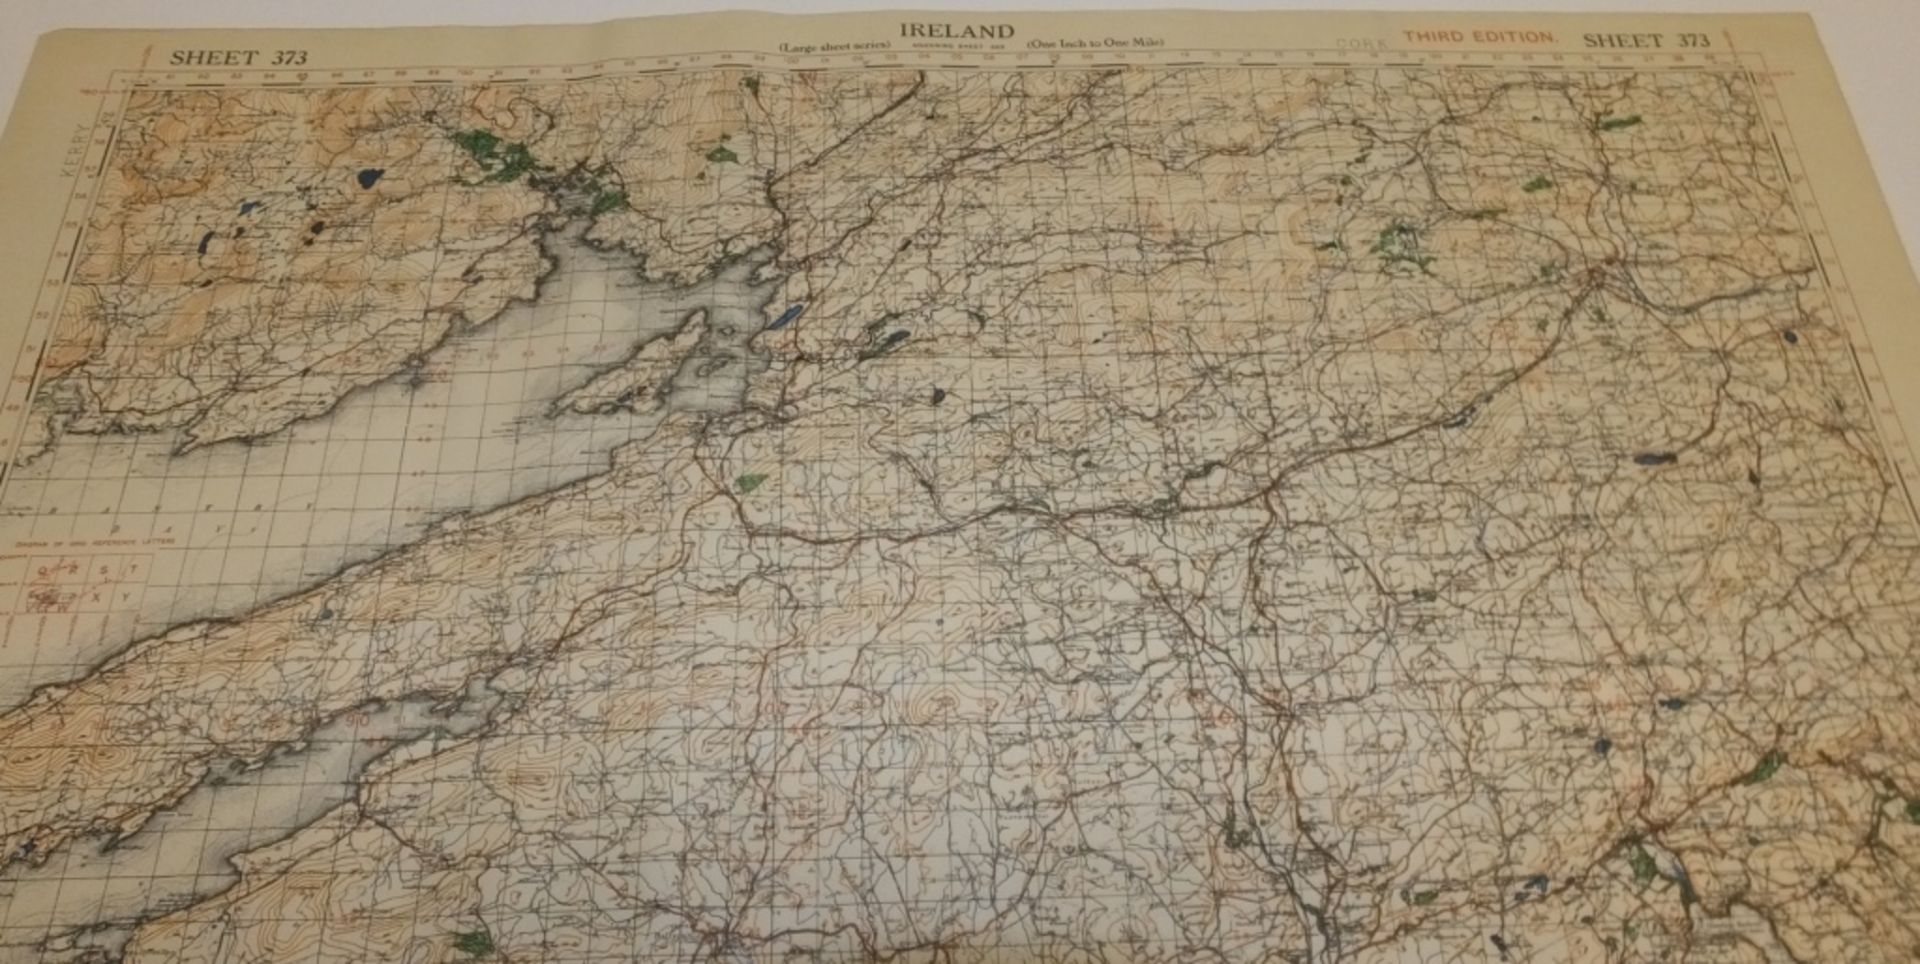 28x IRELAND MAP 1INCH 1MILE 1942 3RD EDITION 4136 GSGS SHEET 373 DRIMOLEAGUE - Image 2 of 3